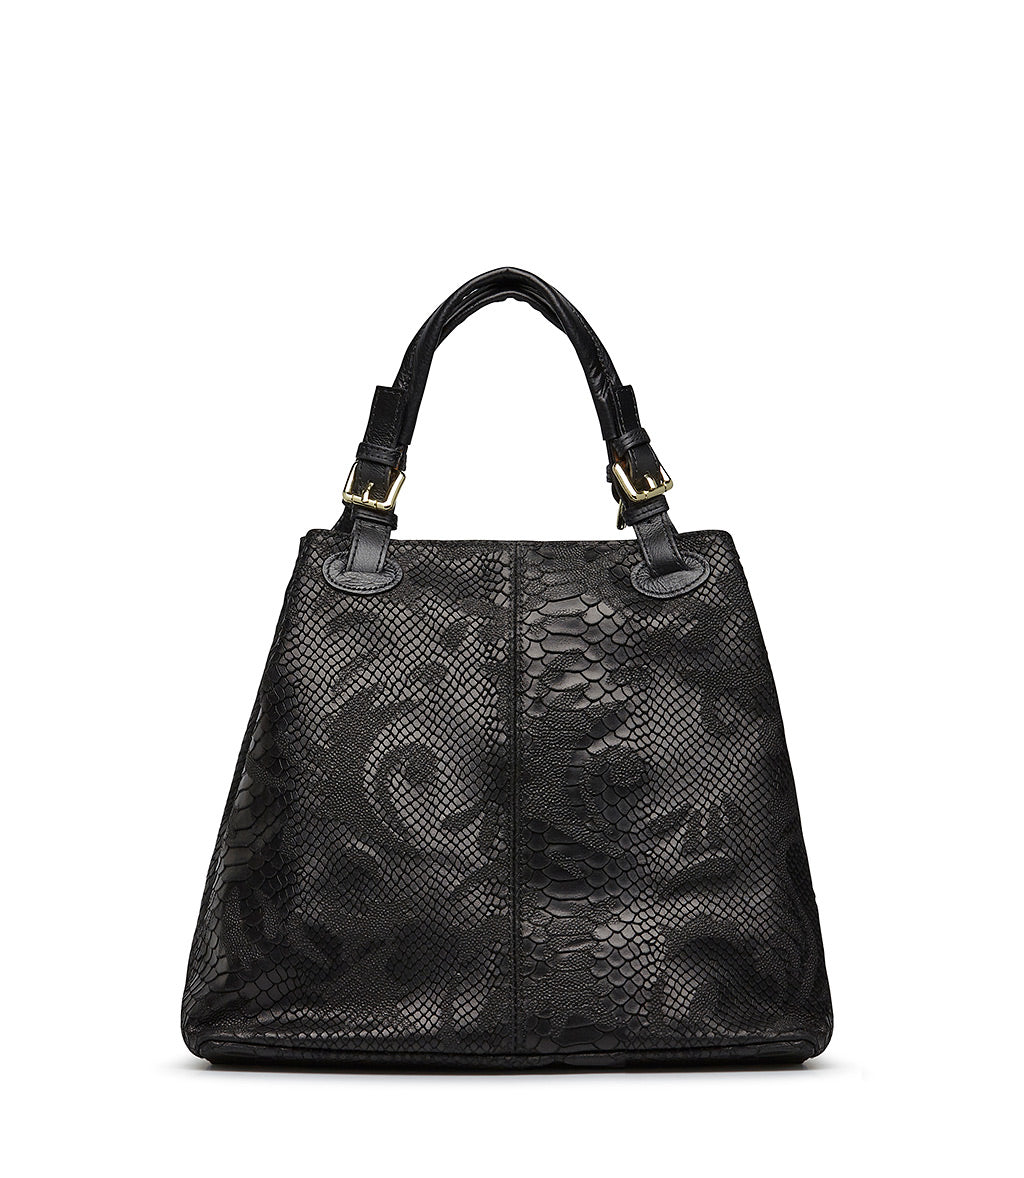 Rhinestoned black suede and nappa leather clutch bag – Loriblu.com